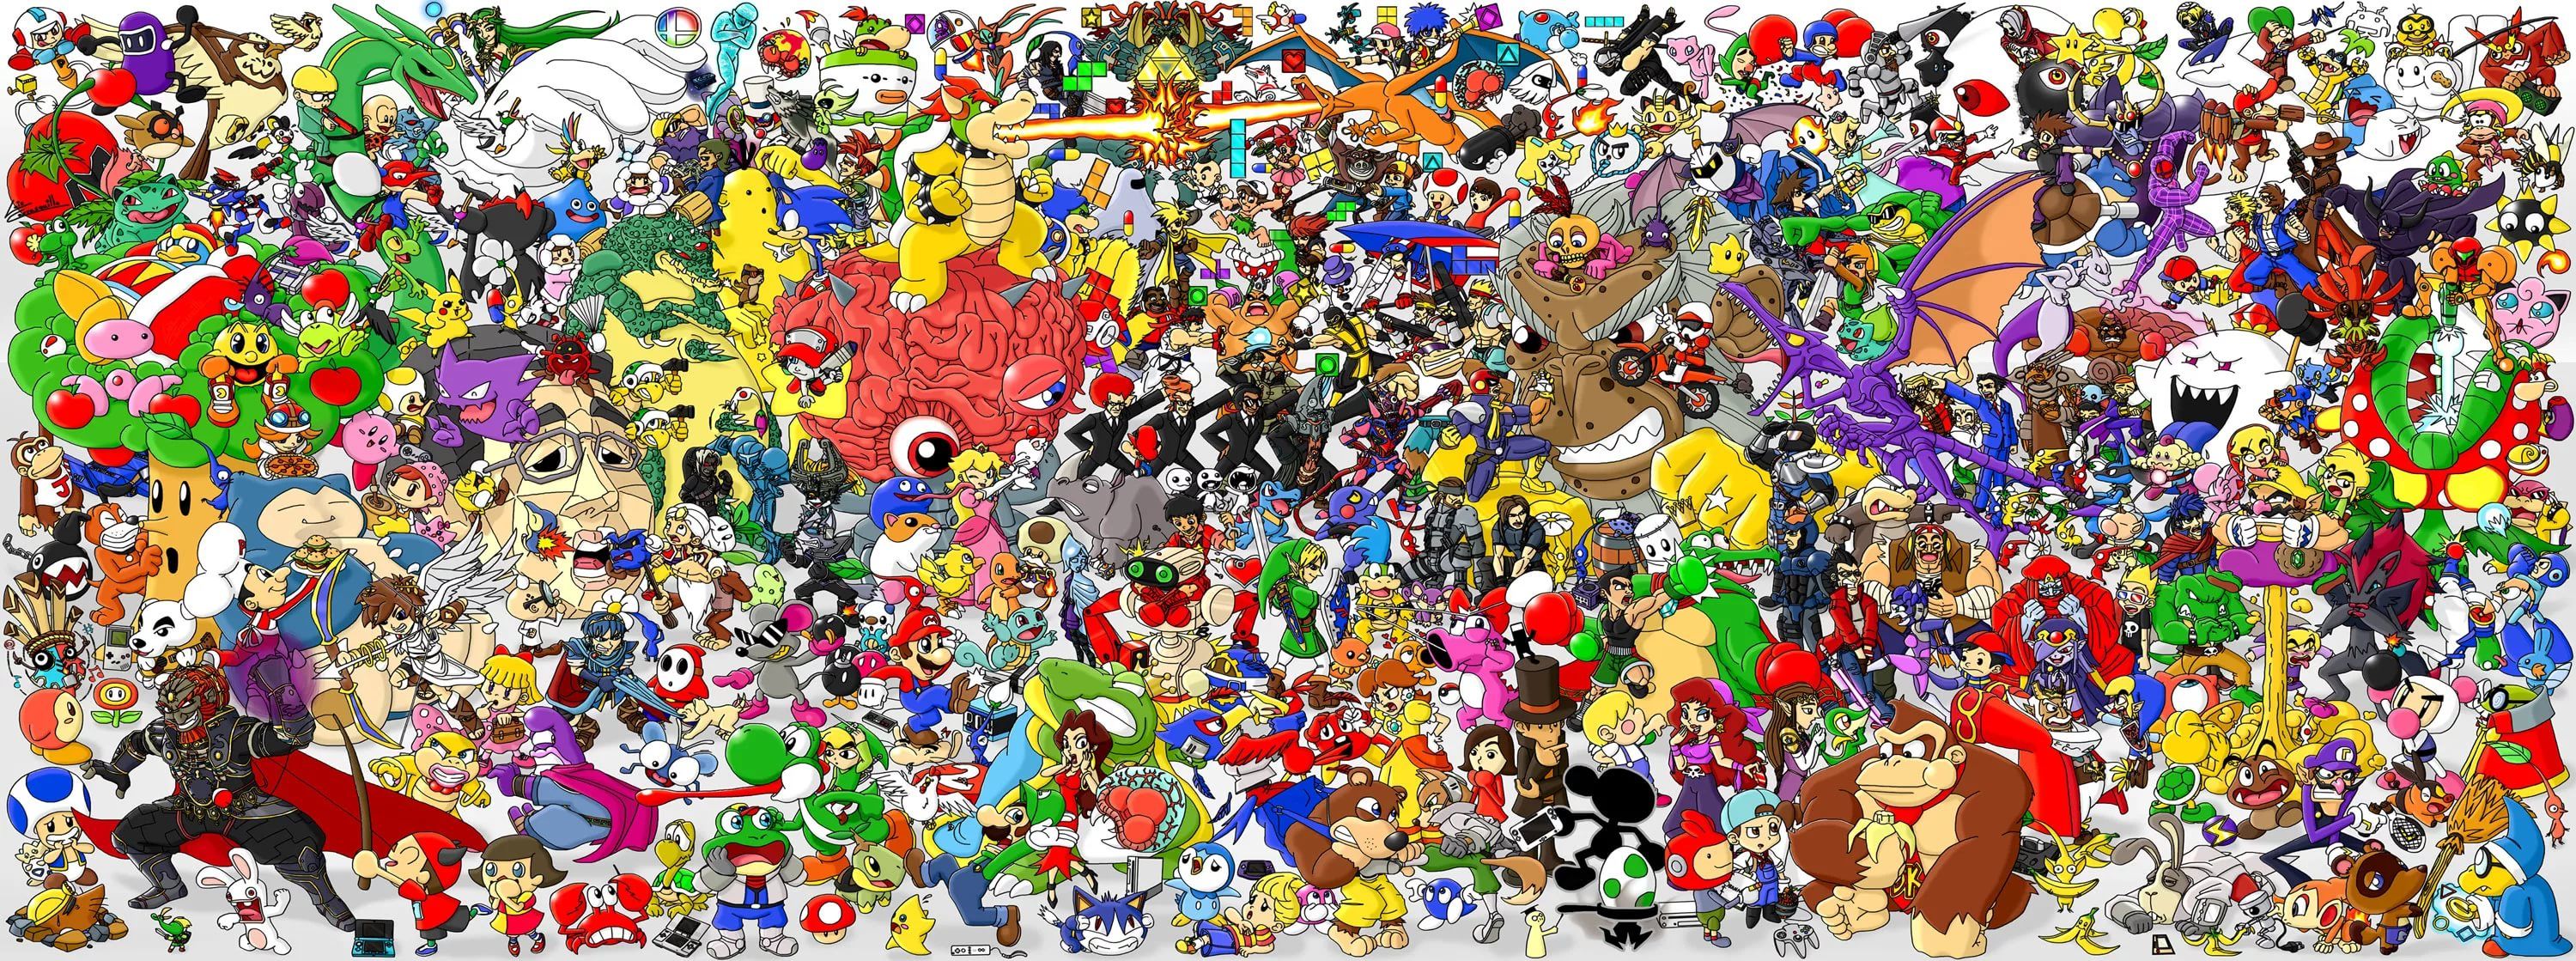 Retro Games Wallpaper For Computer Of The Nintendo